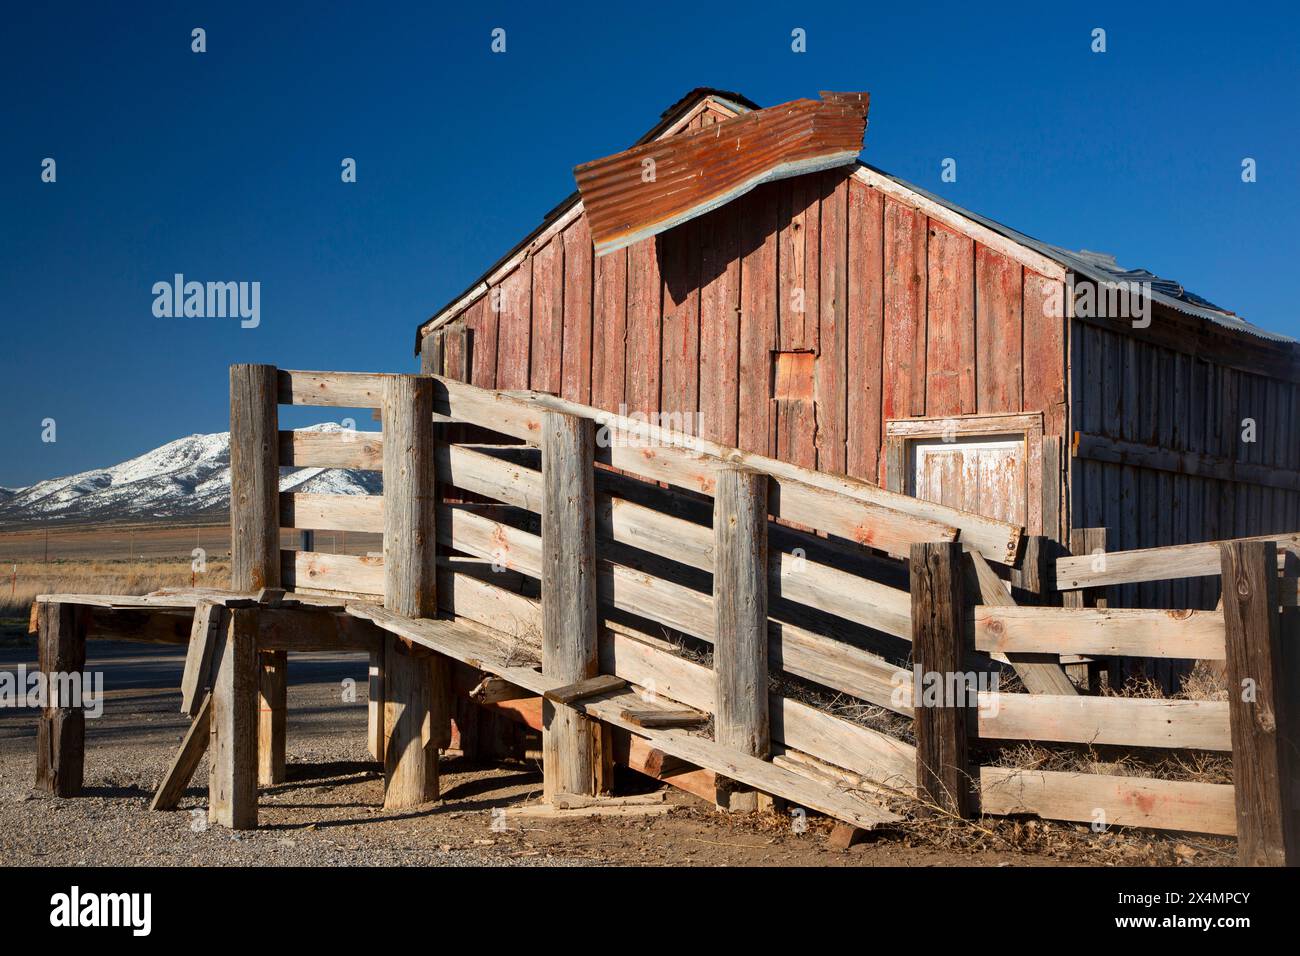 Headquarters barn, Steptoe Valley Wildlife Management Area, Nevada Stock Photo